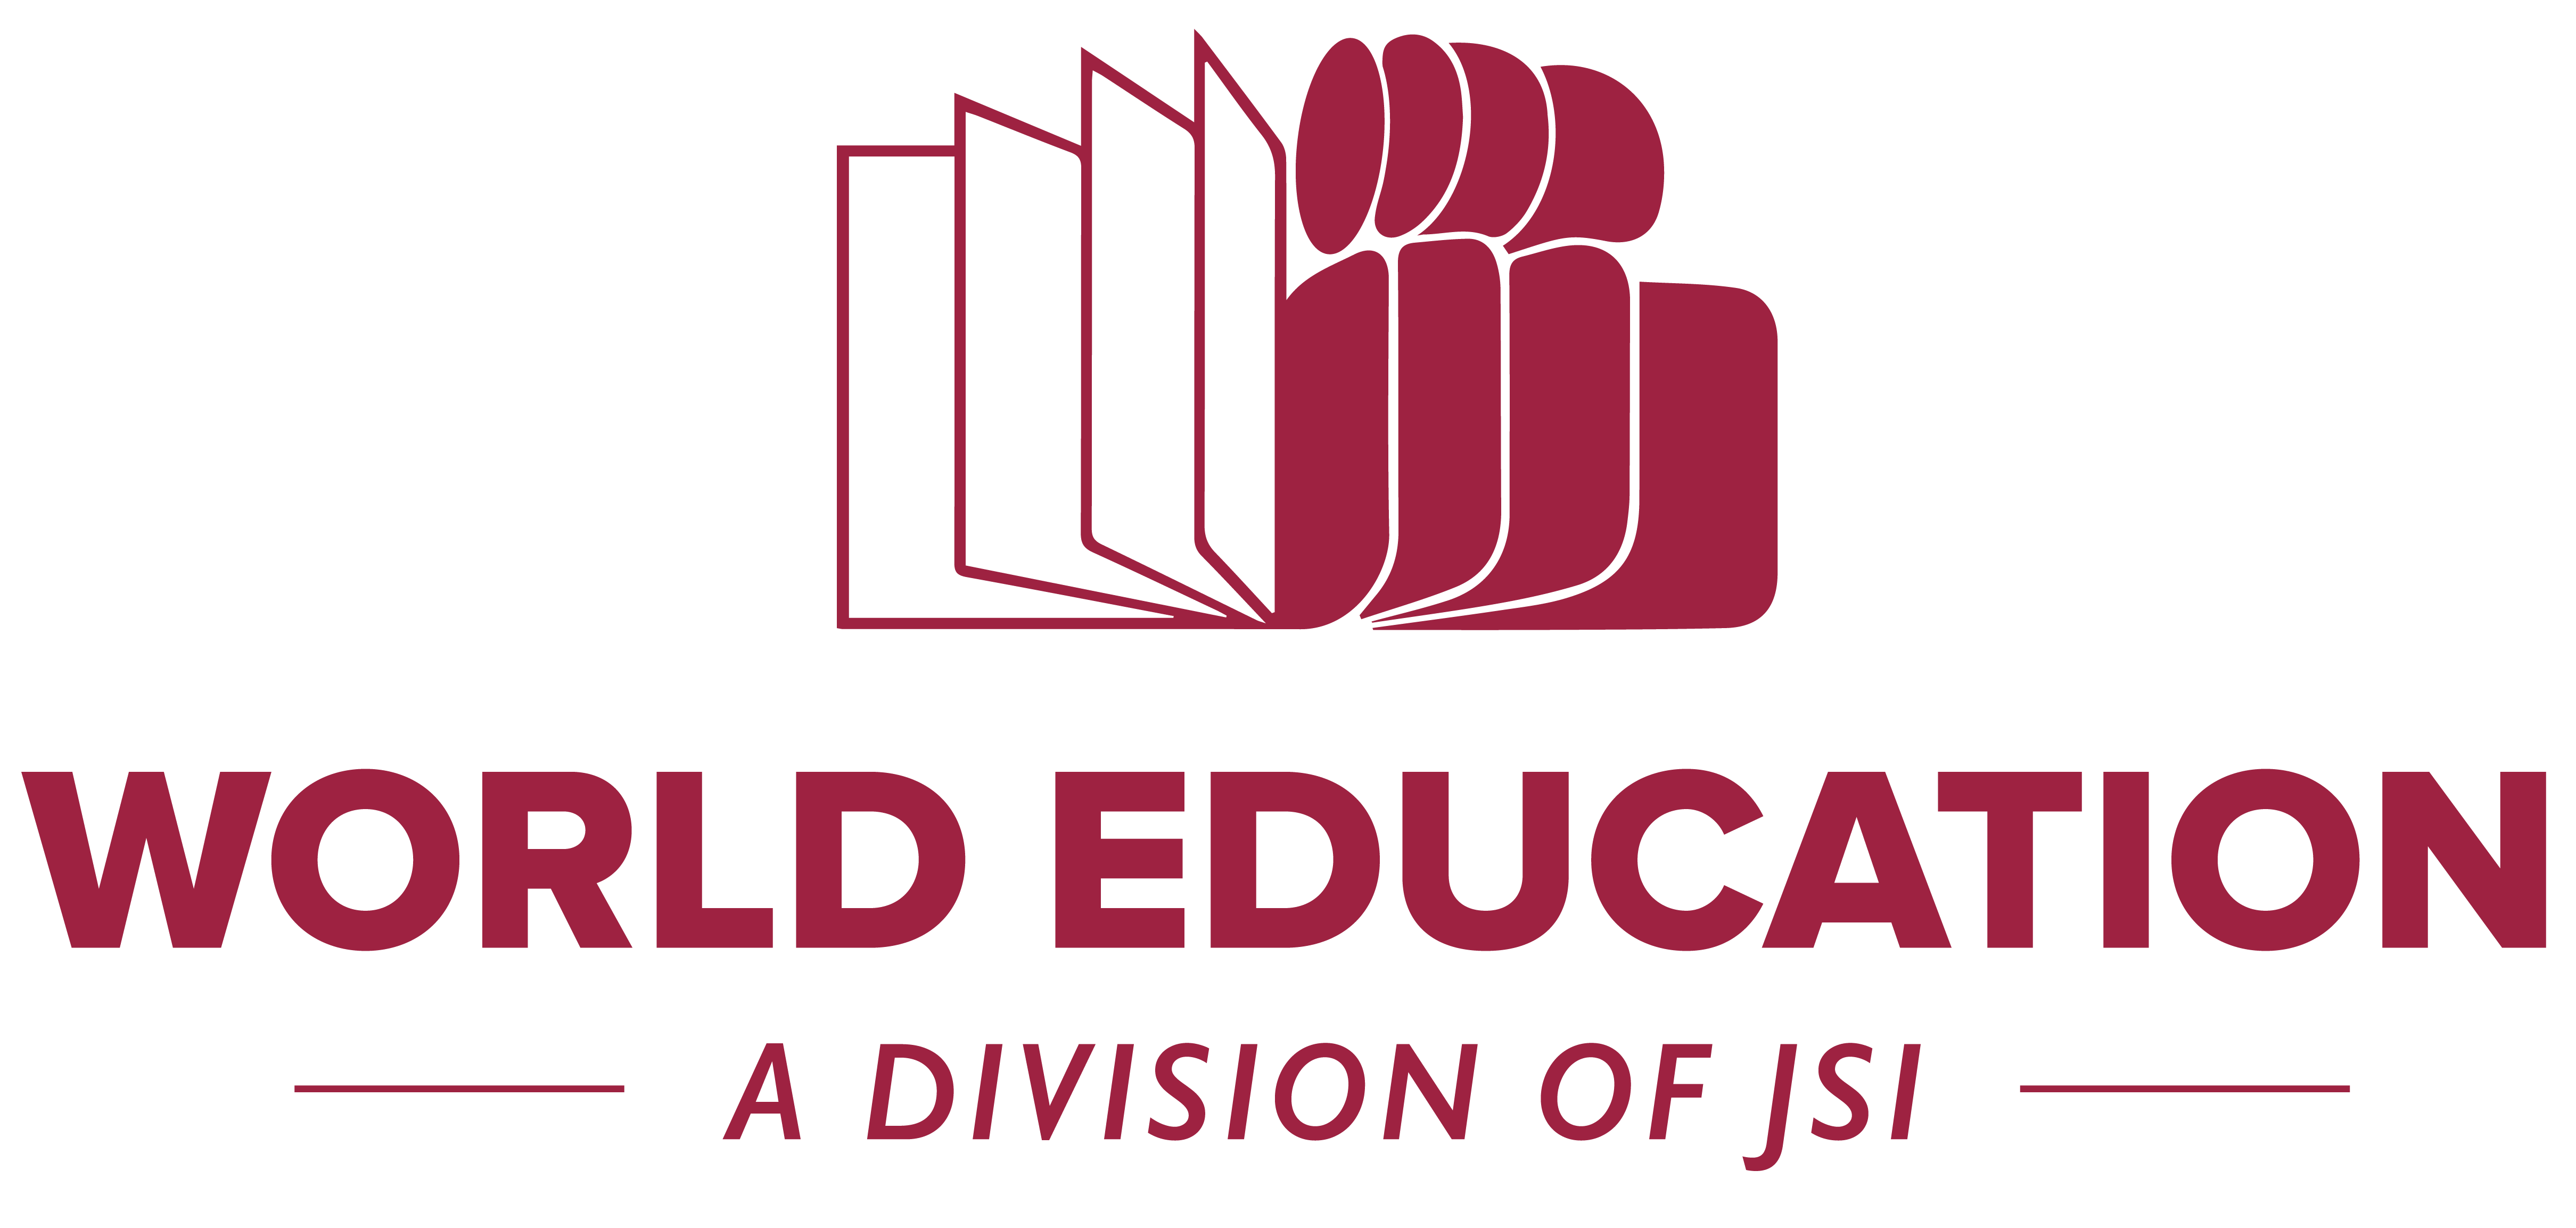 World Education, A Division of JSI logo